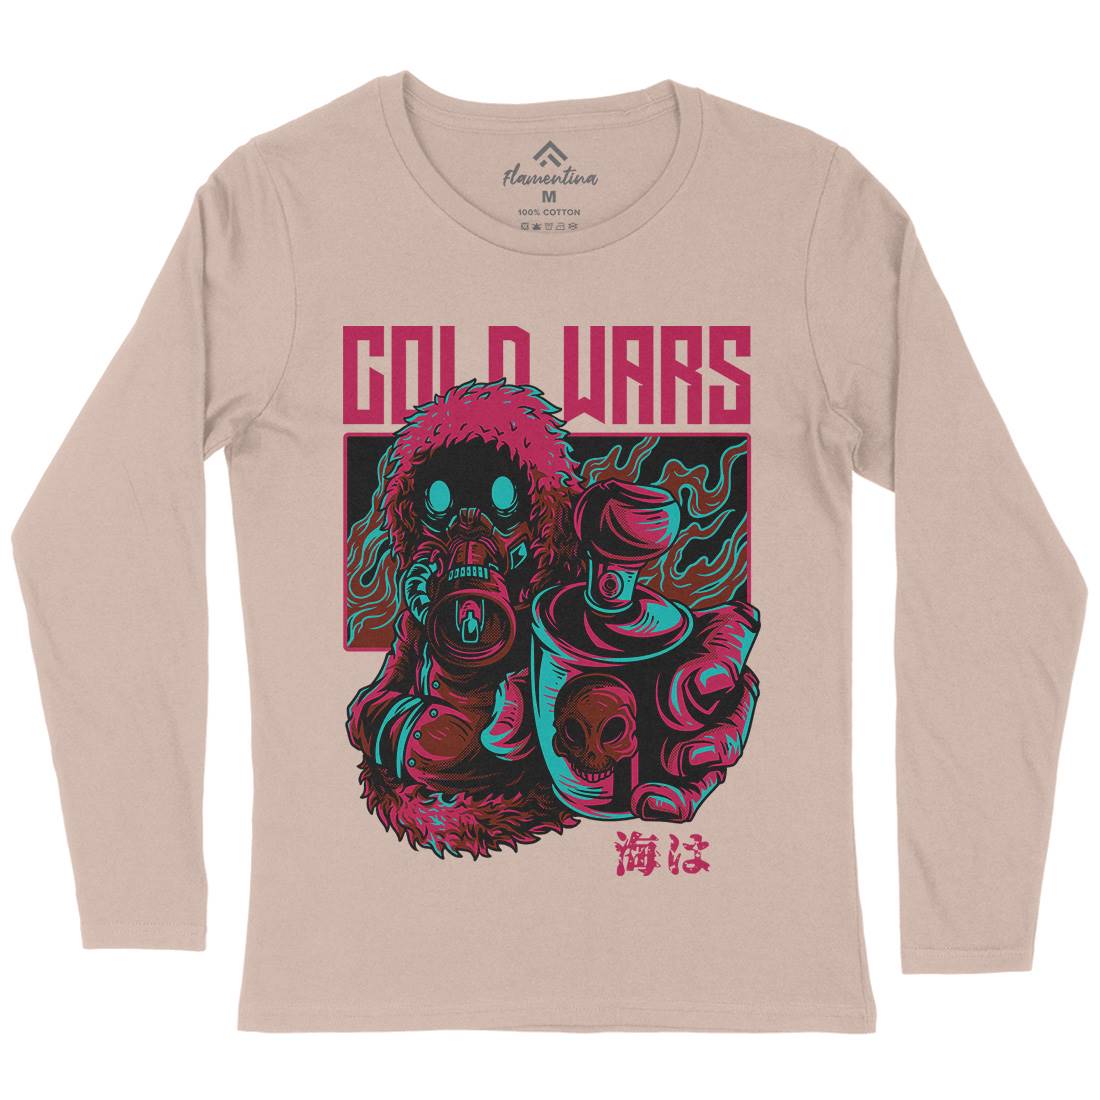 Cold Wars Womens Long Sleeve T-Shirt Graffiti D727